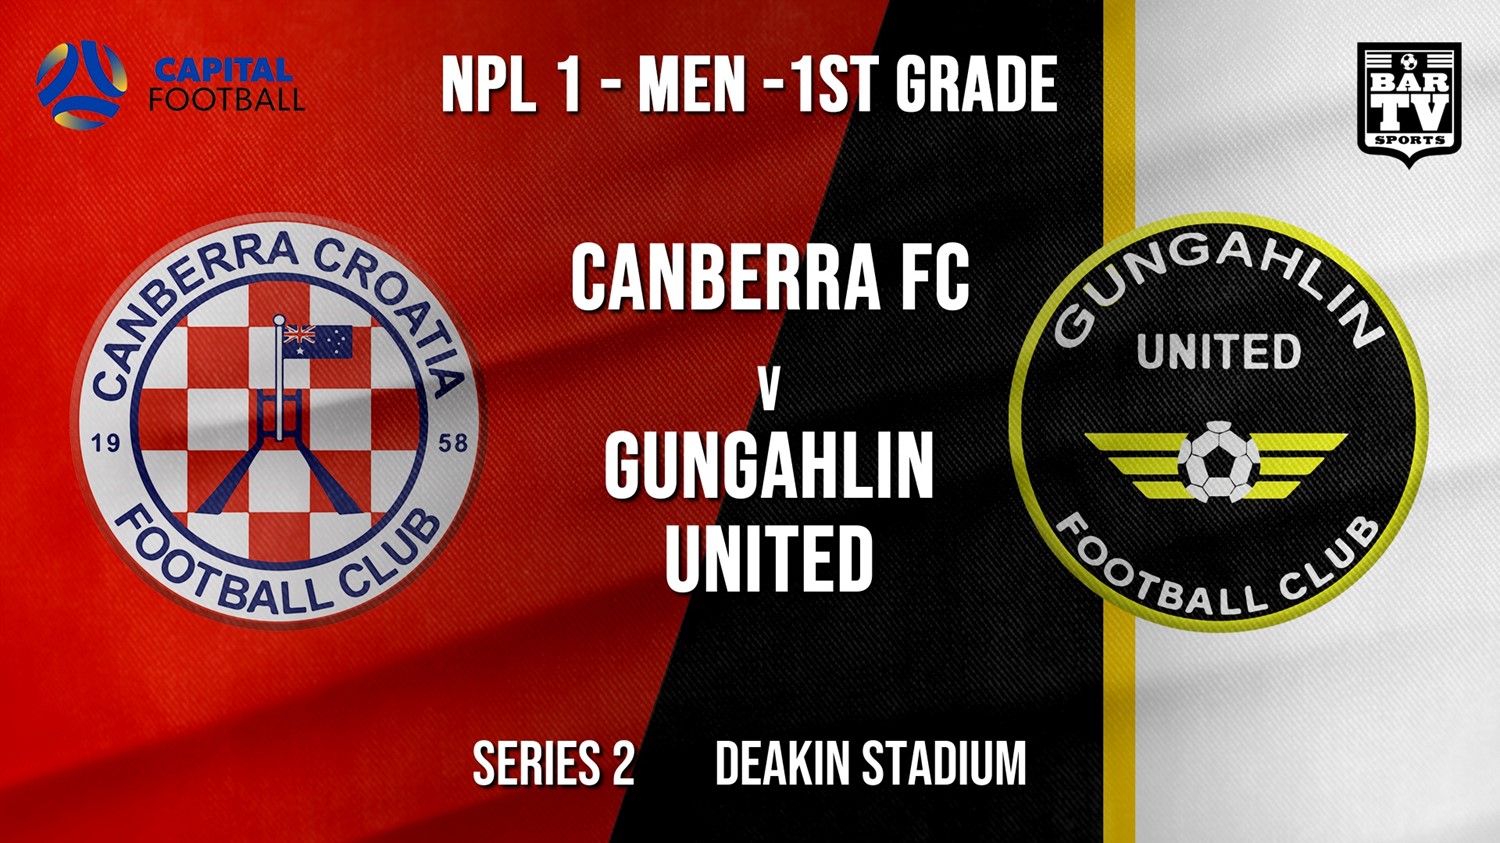 NPL - CAPITAL Series 2 - Canberra FC v Gungahlin United FC Minigame Slate Image